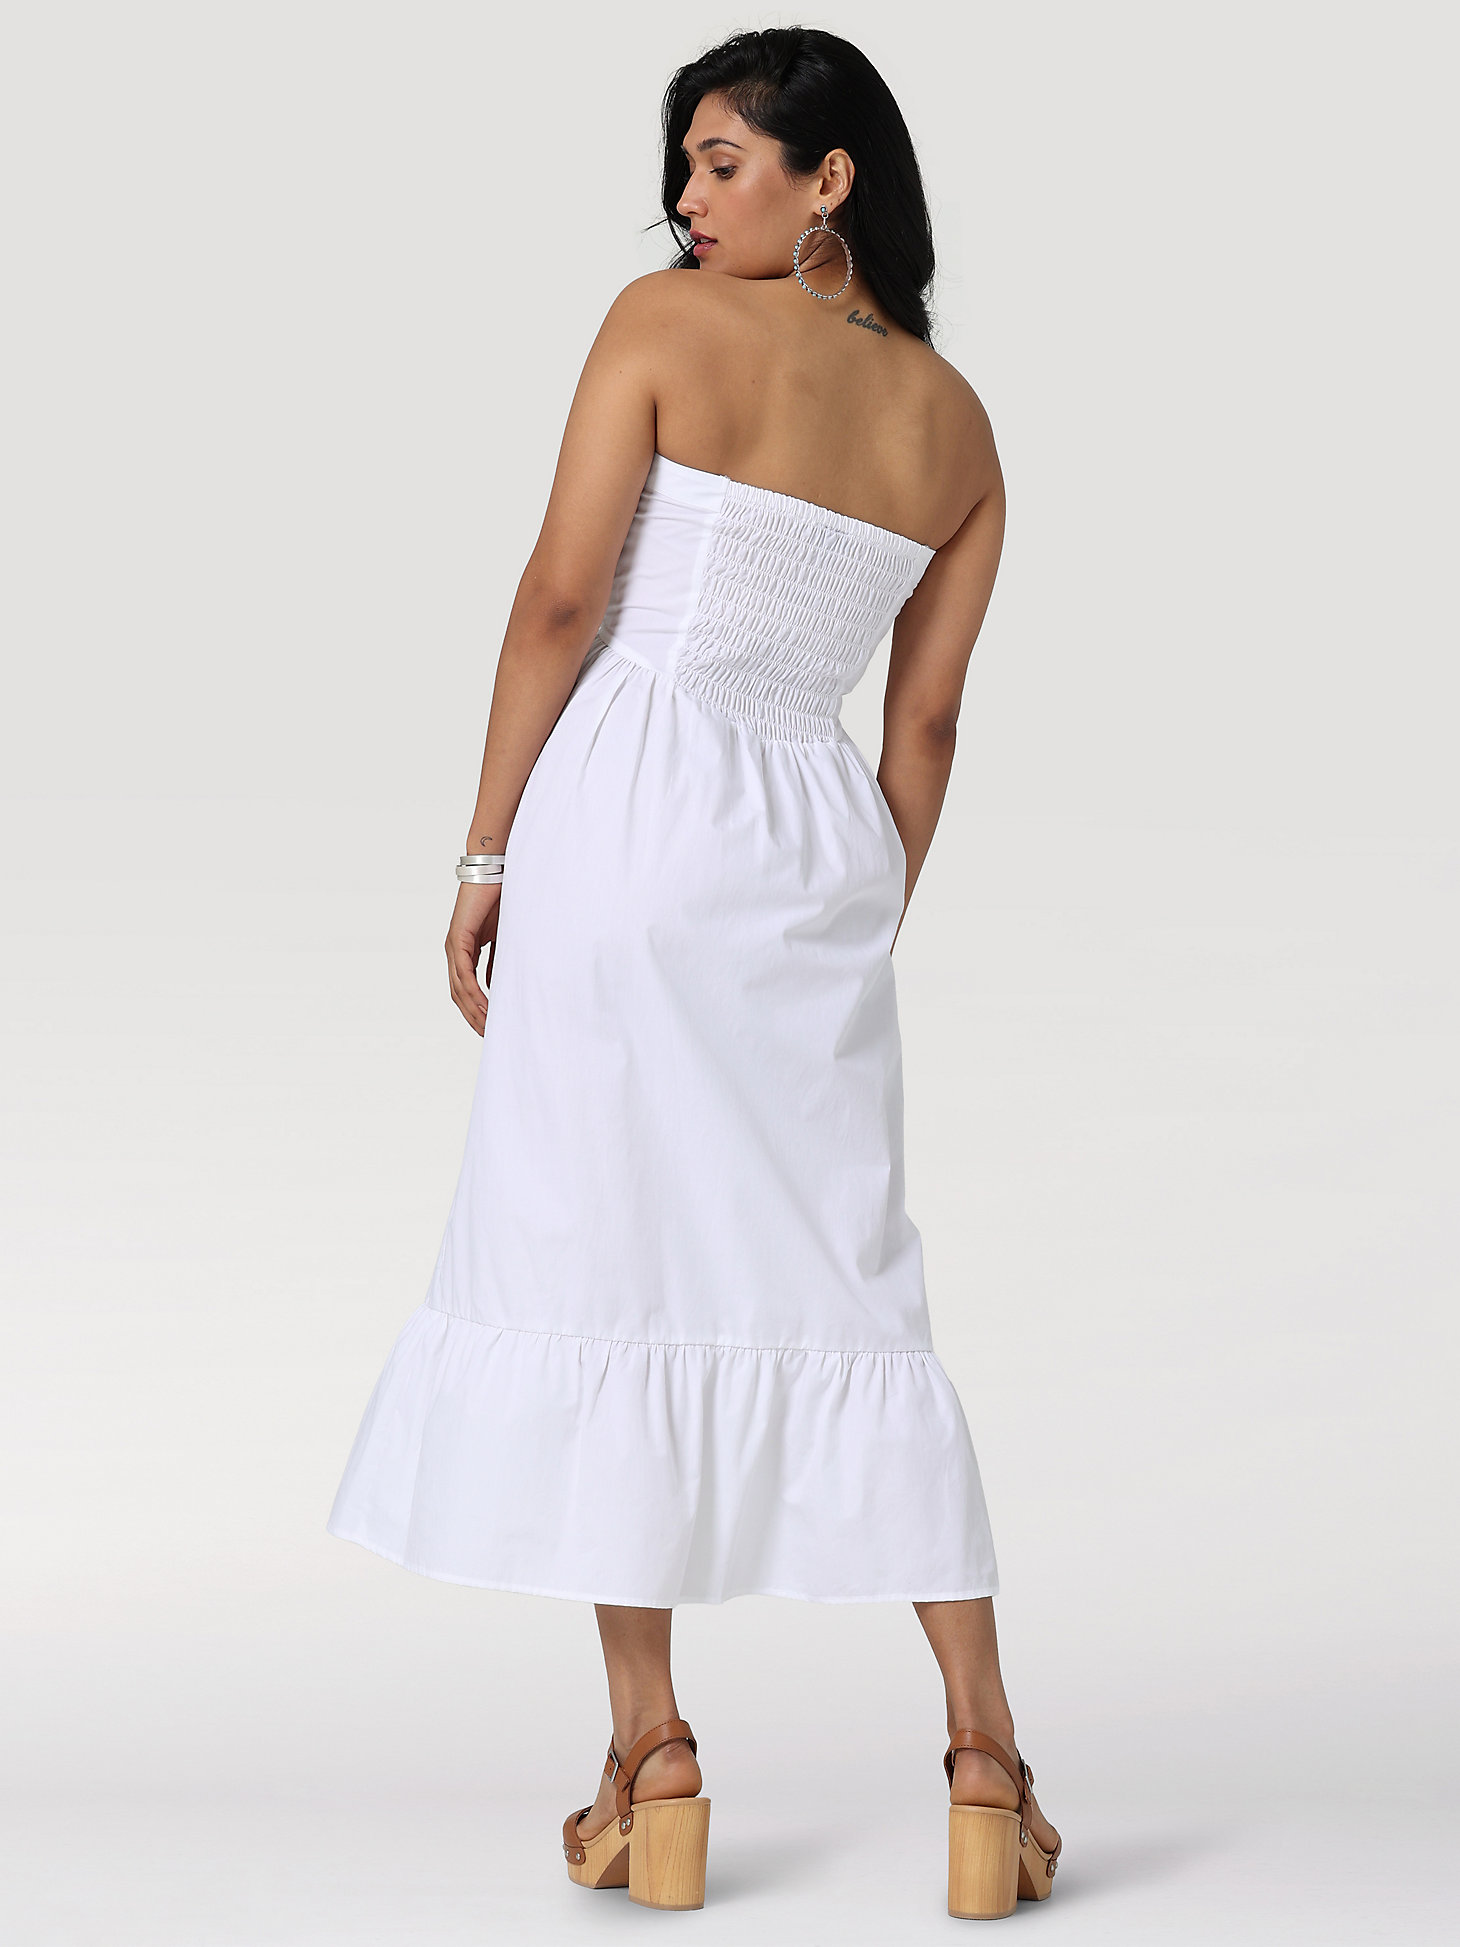 Women's Wrangler Retro Americana Strapless Corset Dress in Bright White alternative view 1